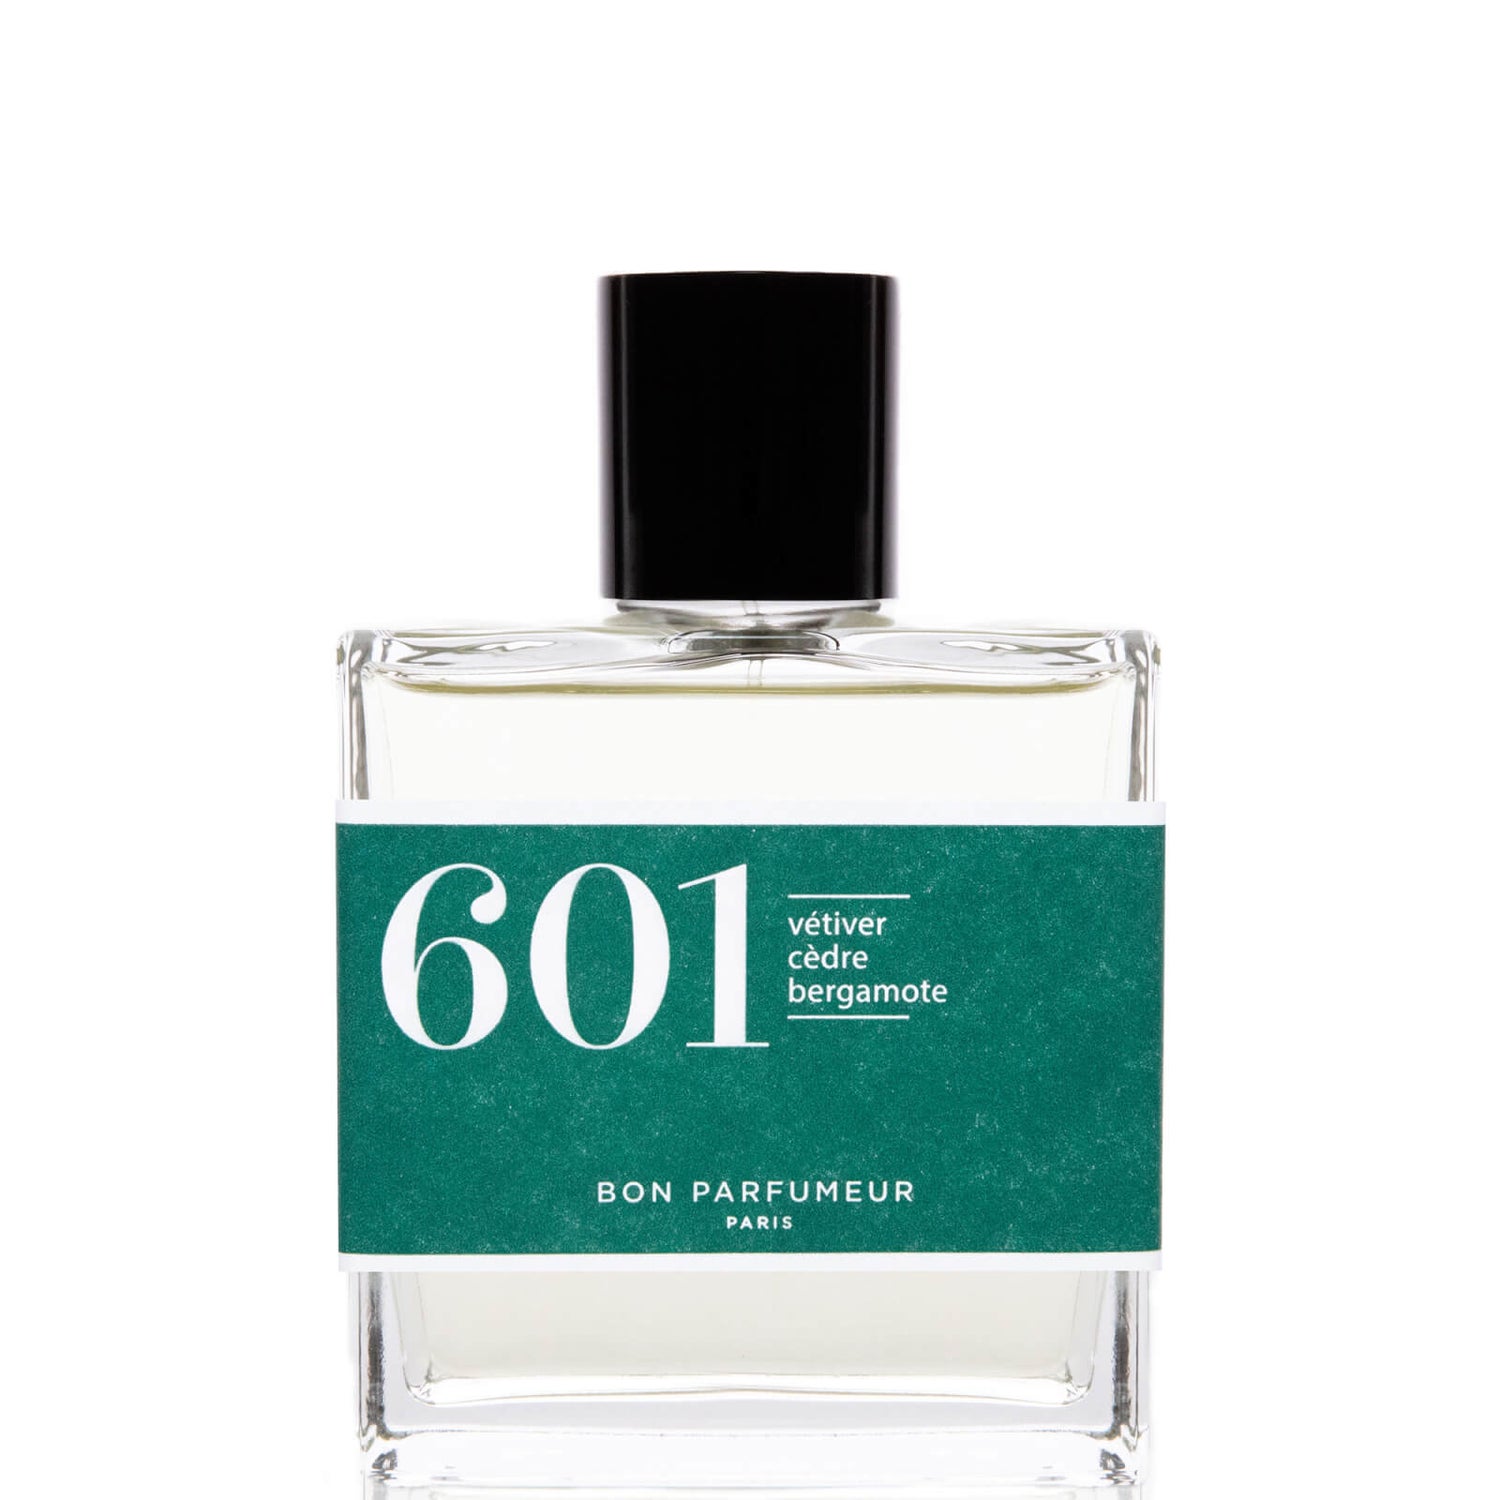 Bon Parfumeur 601 Vetiver Cedro Bergamotto Eau de Parfum - 100ml